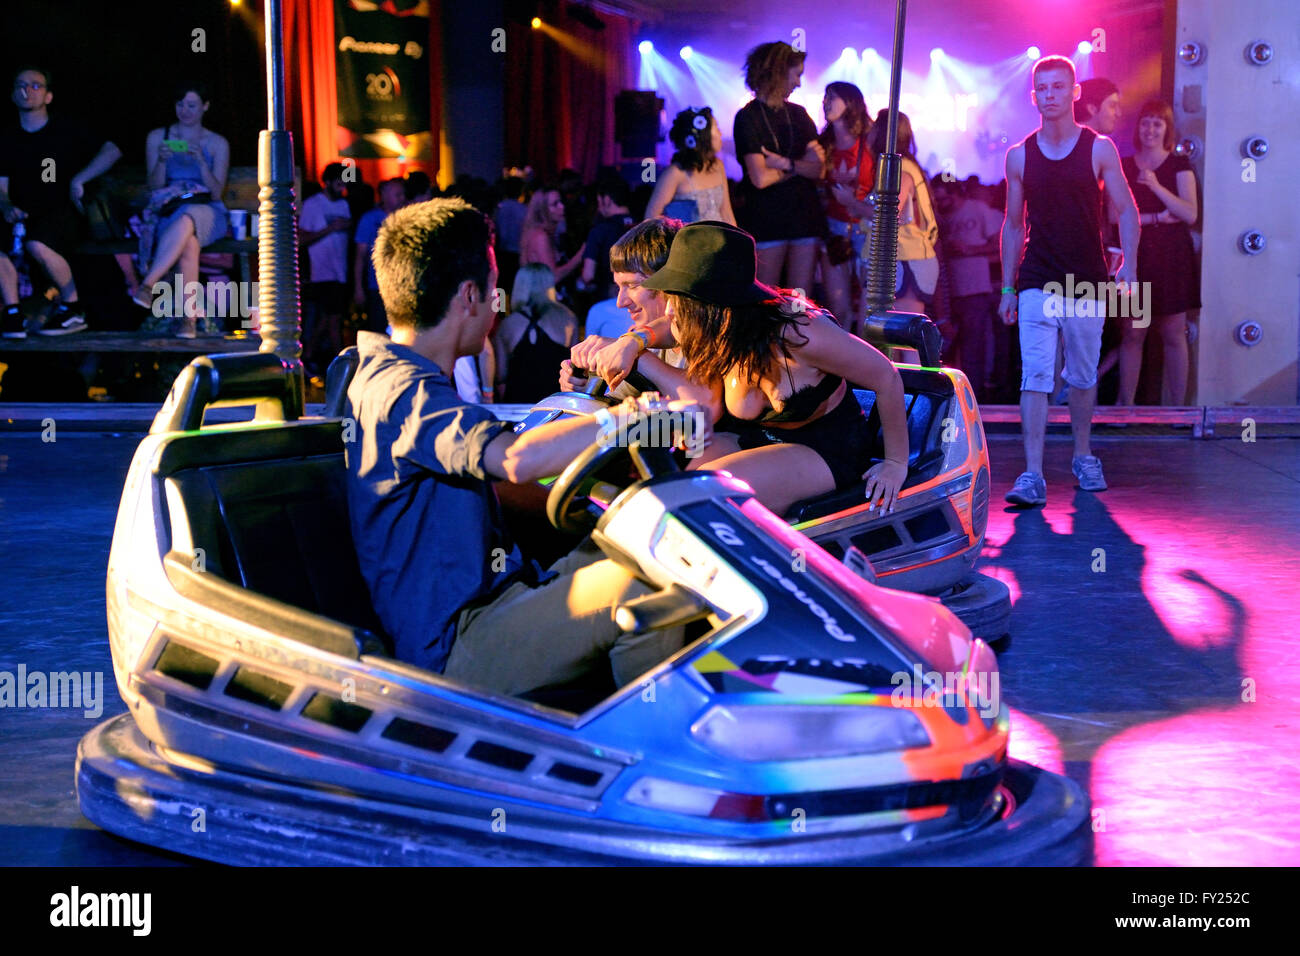 BARCELONA - 14 JUN: Menschen am Autoscooter am Sonar Festival am 14. Juni 2014 in Barcelona, Spanien. Stockfoto